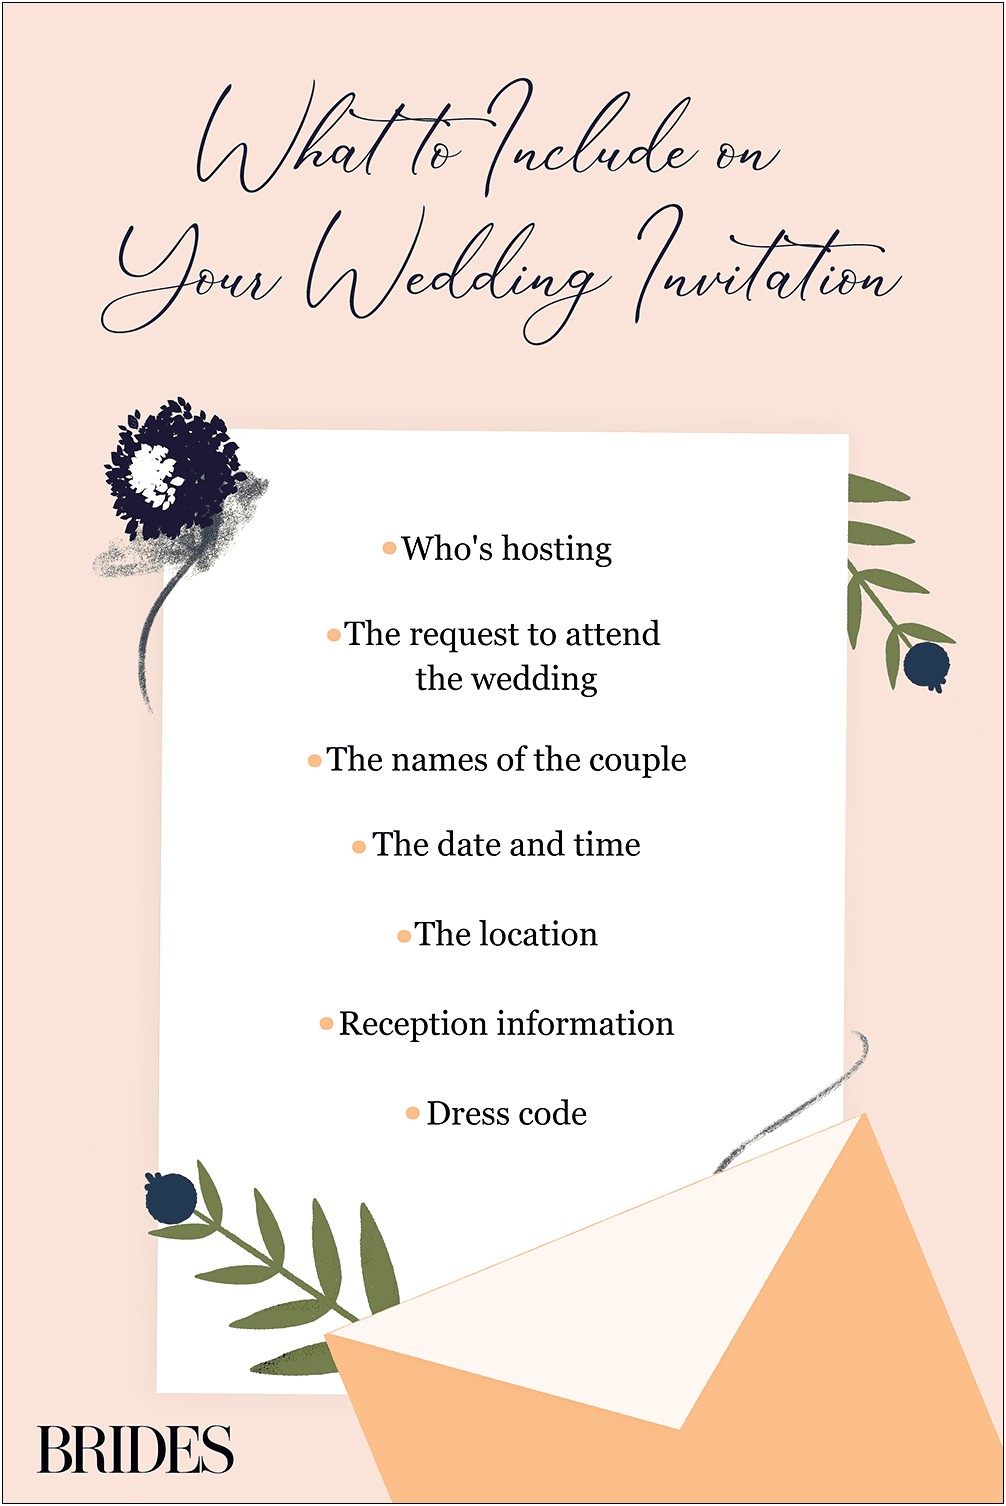 Bride And Groom Parents Hosting Wedding Invitation